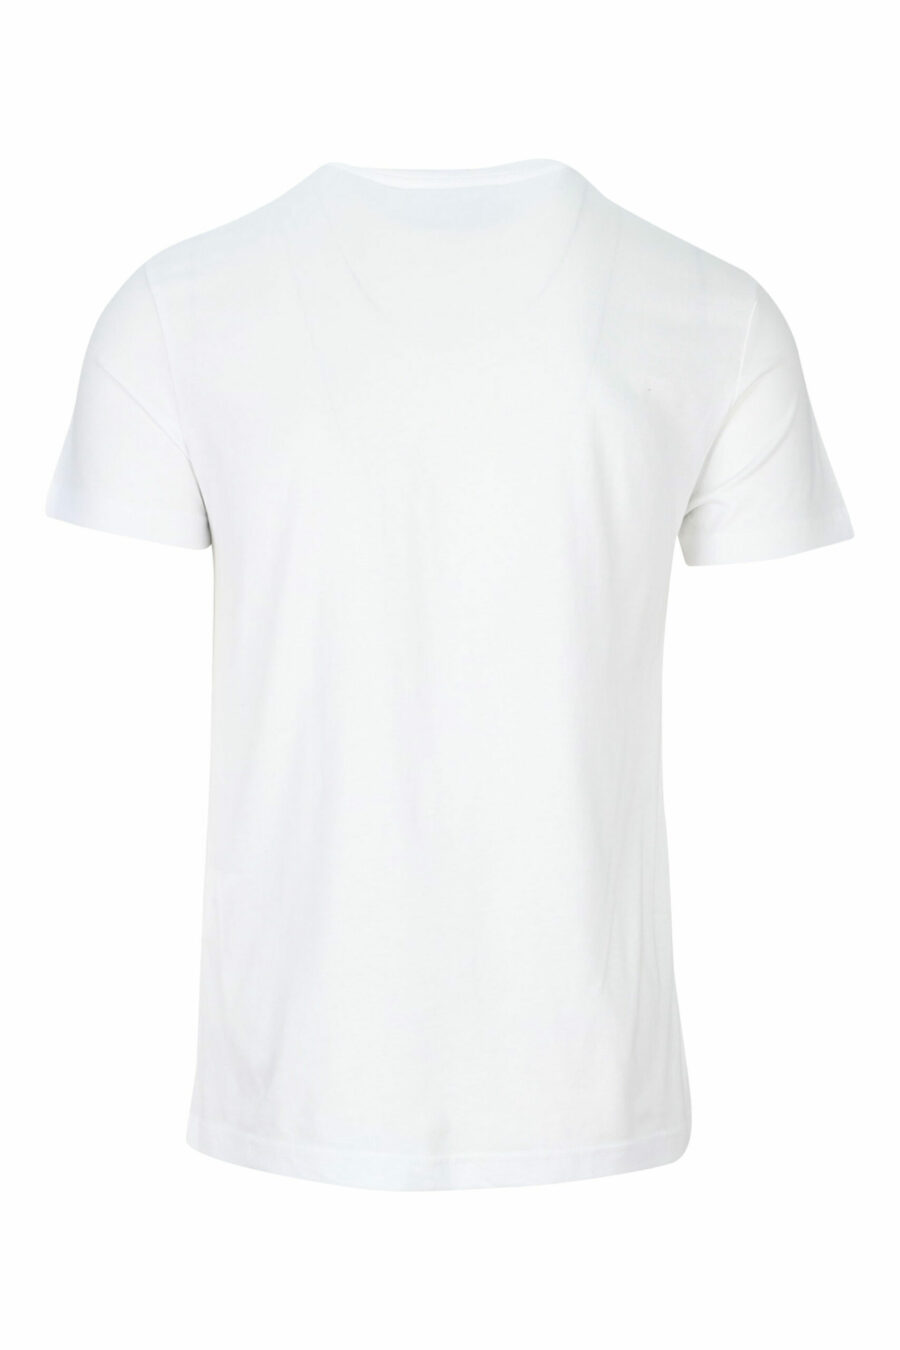 T-shirt branca com mini-logotipo circular dourado - 8052019468397 1 à escala